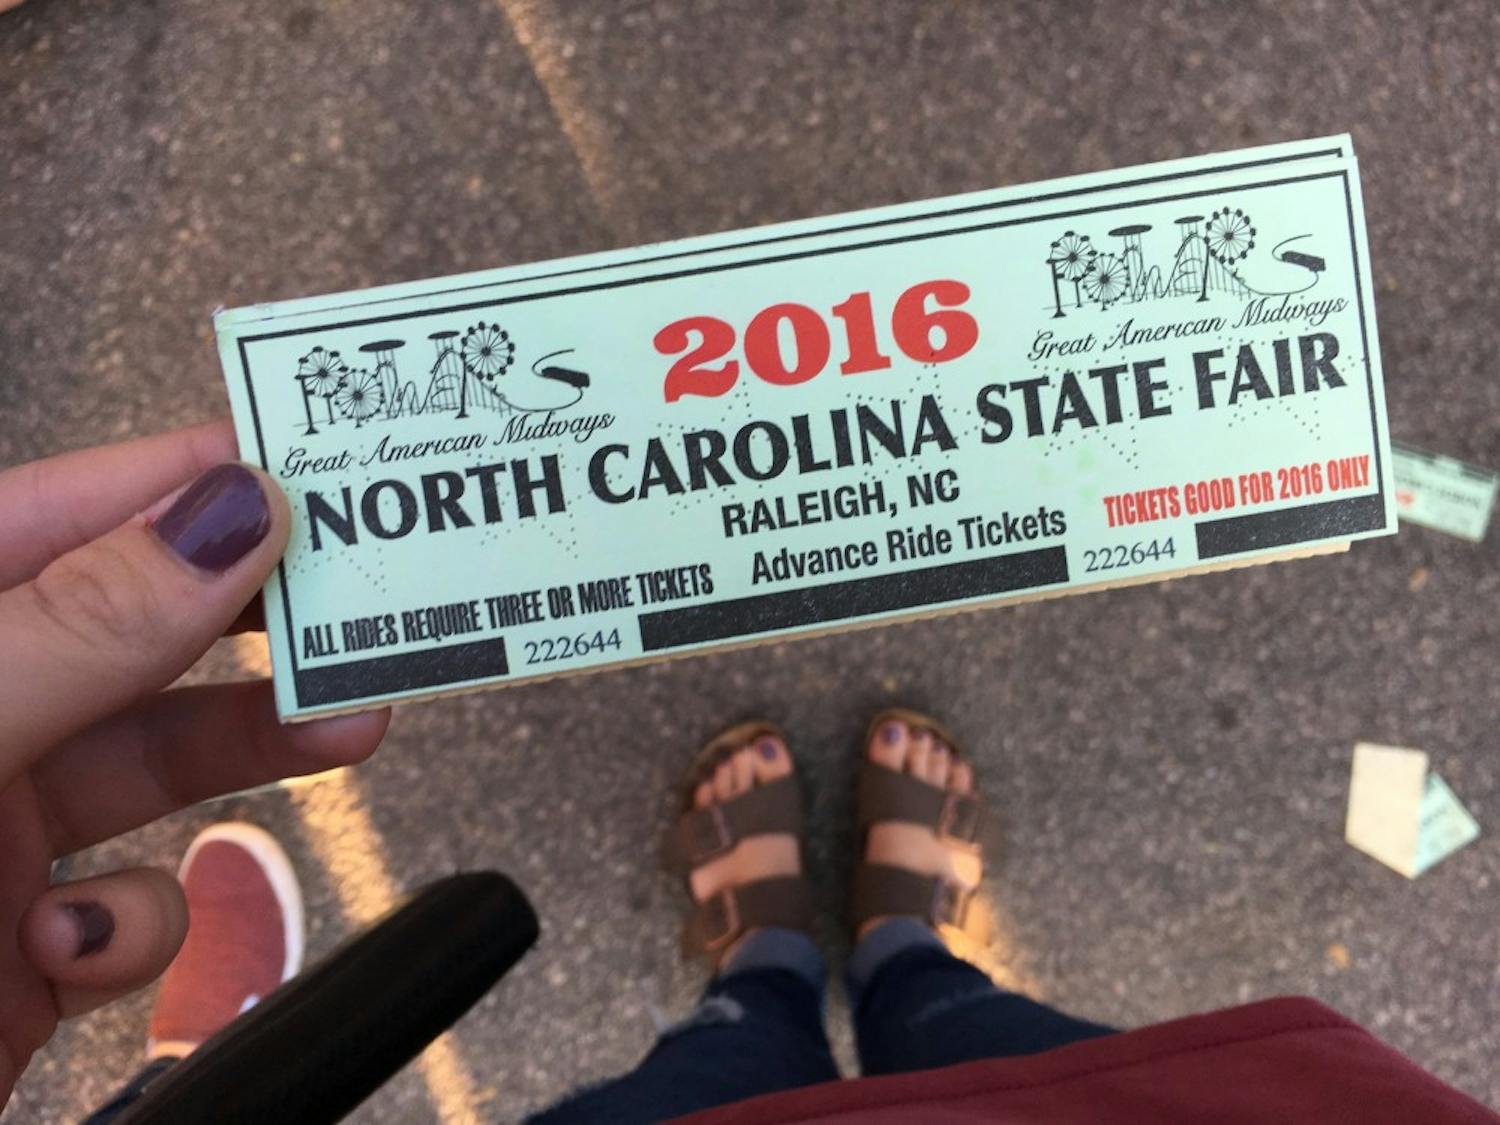 An advanced ride ticket book for the NC State Fair.